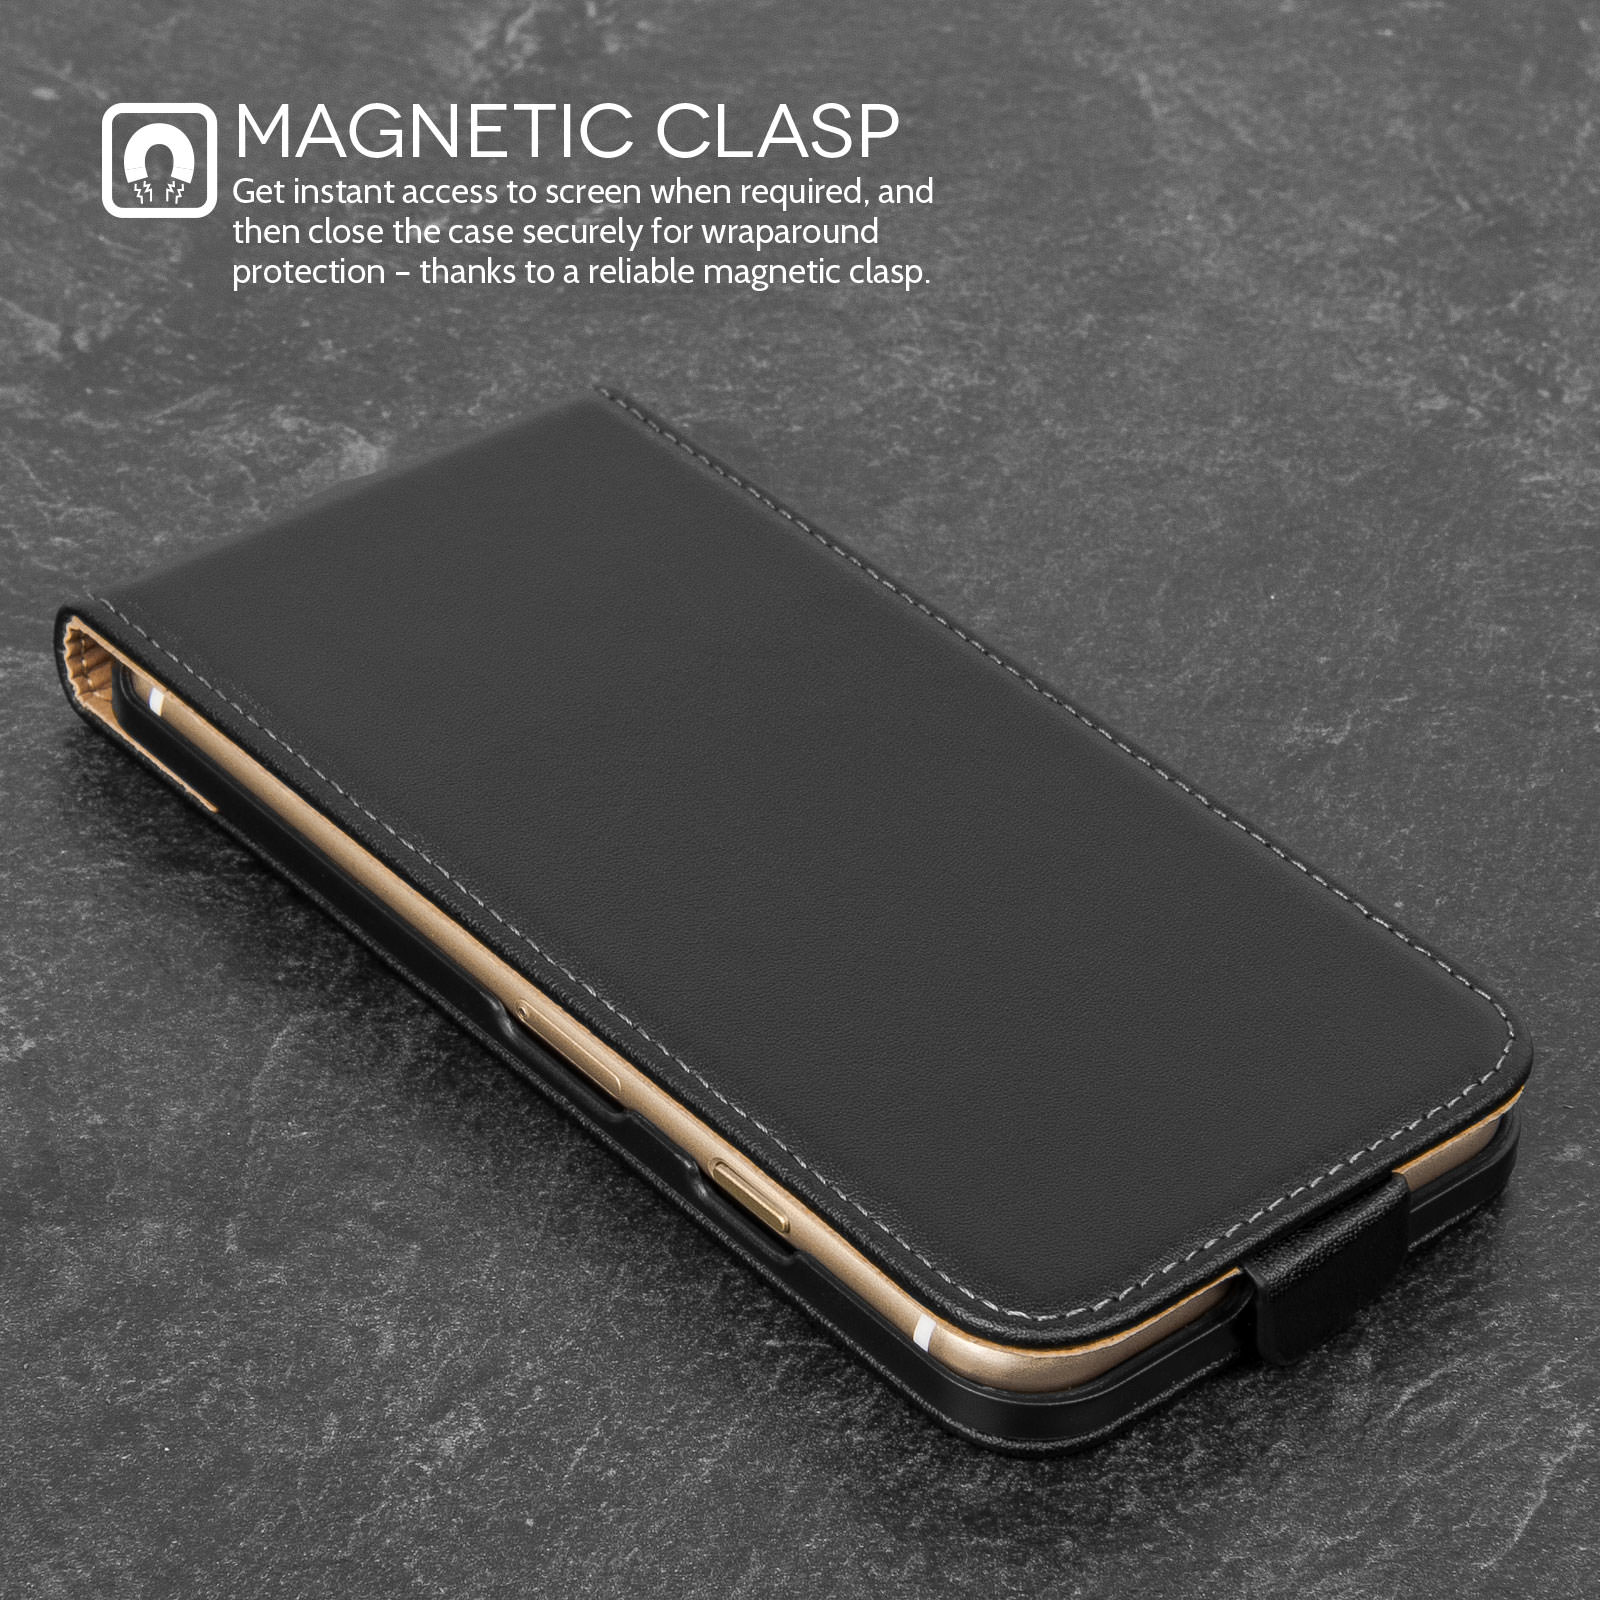 Caseflex iPhone 7 Real Leather Flip Case - Black